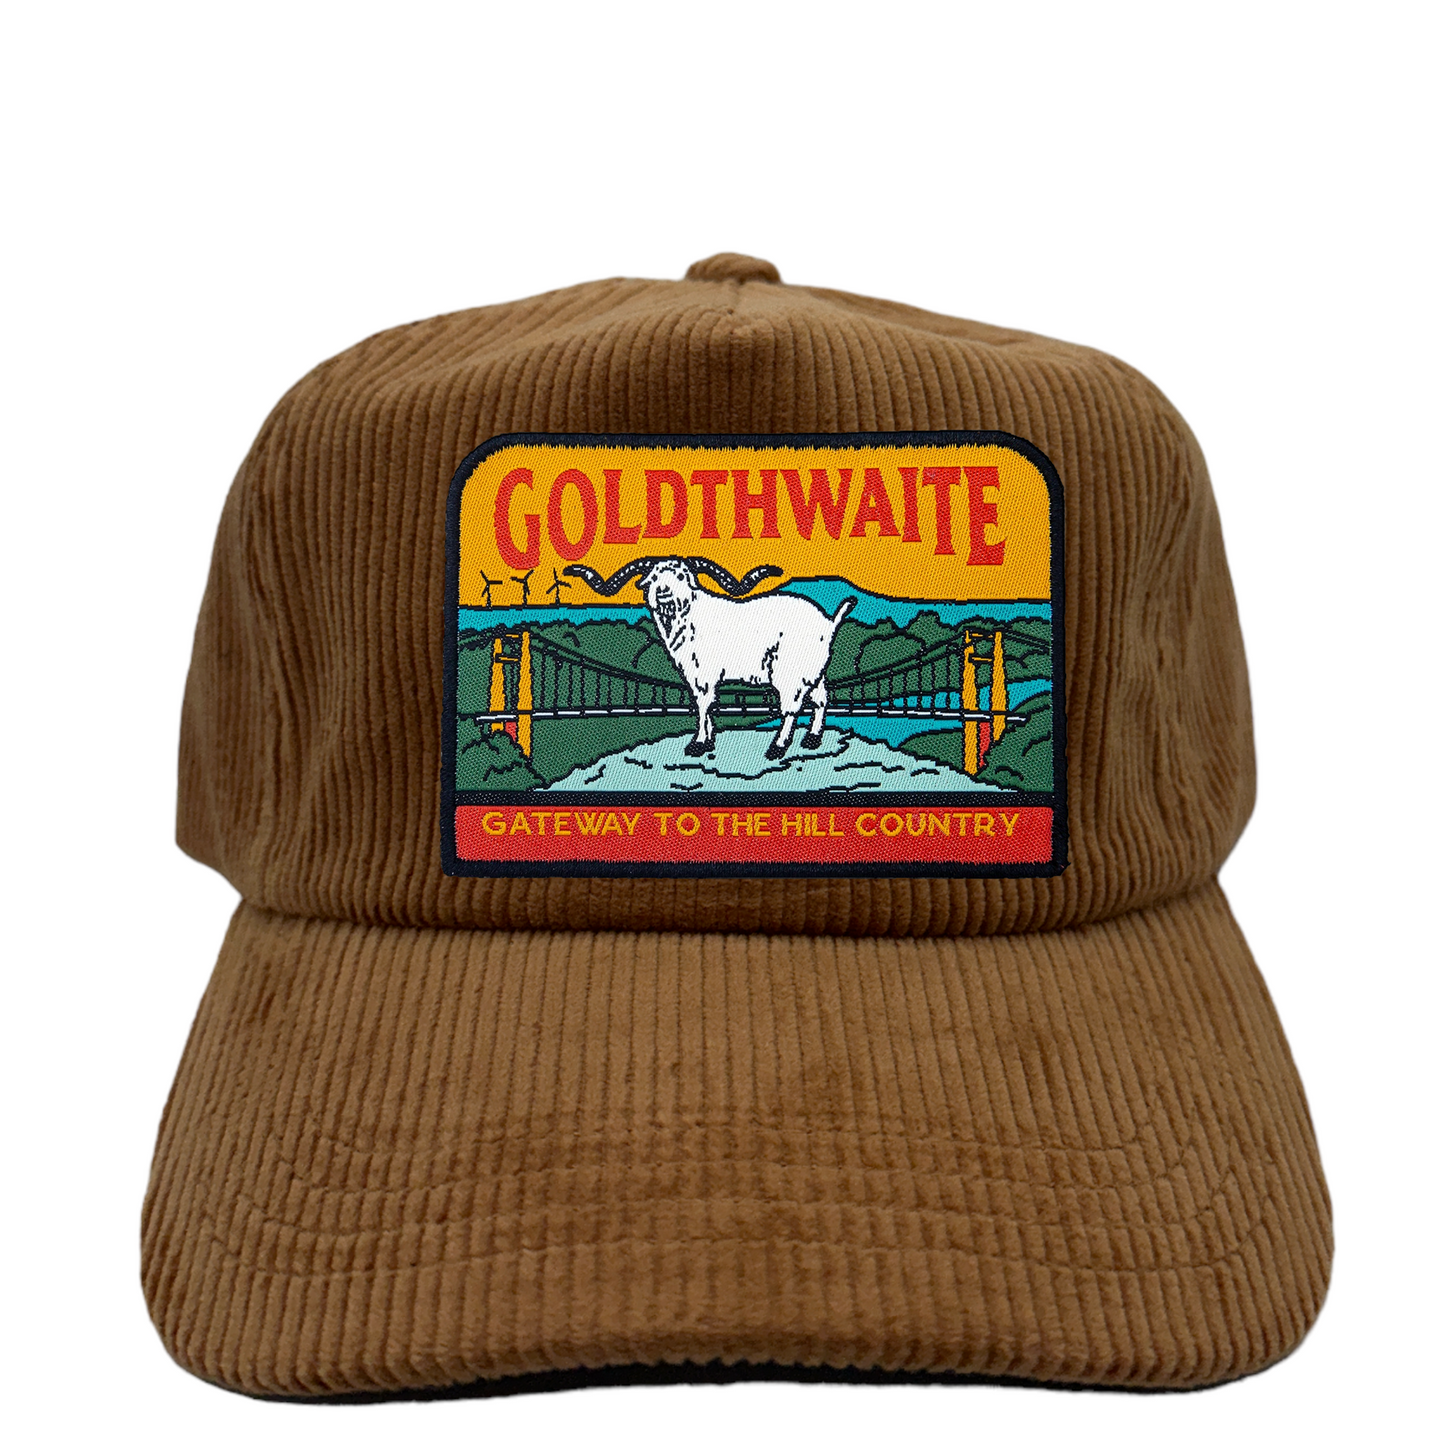 Goldthwaite, TX Corduroy Snapback